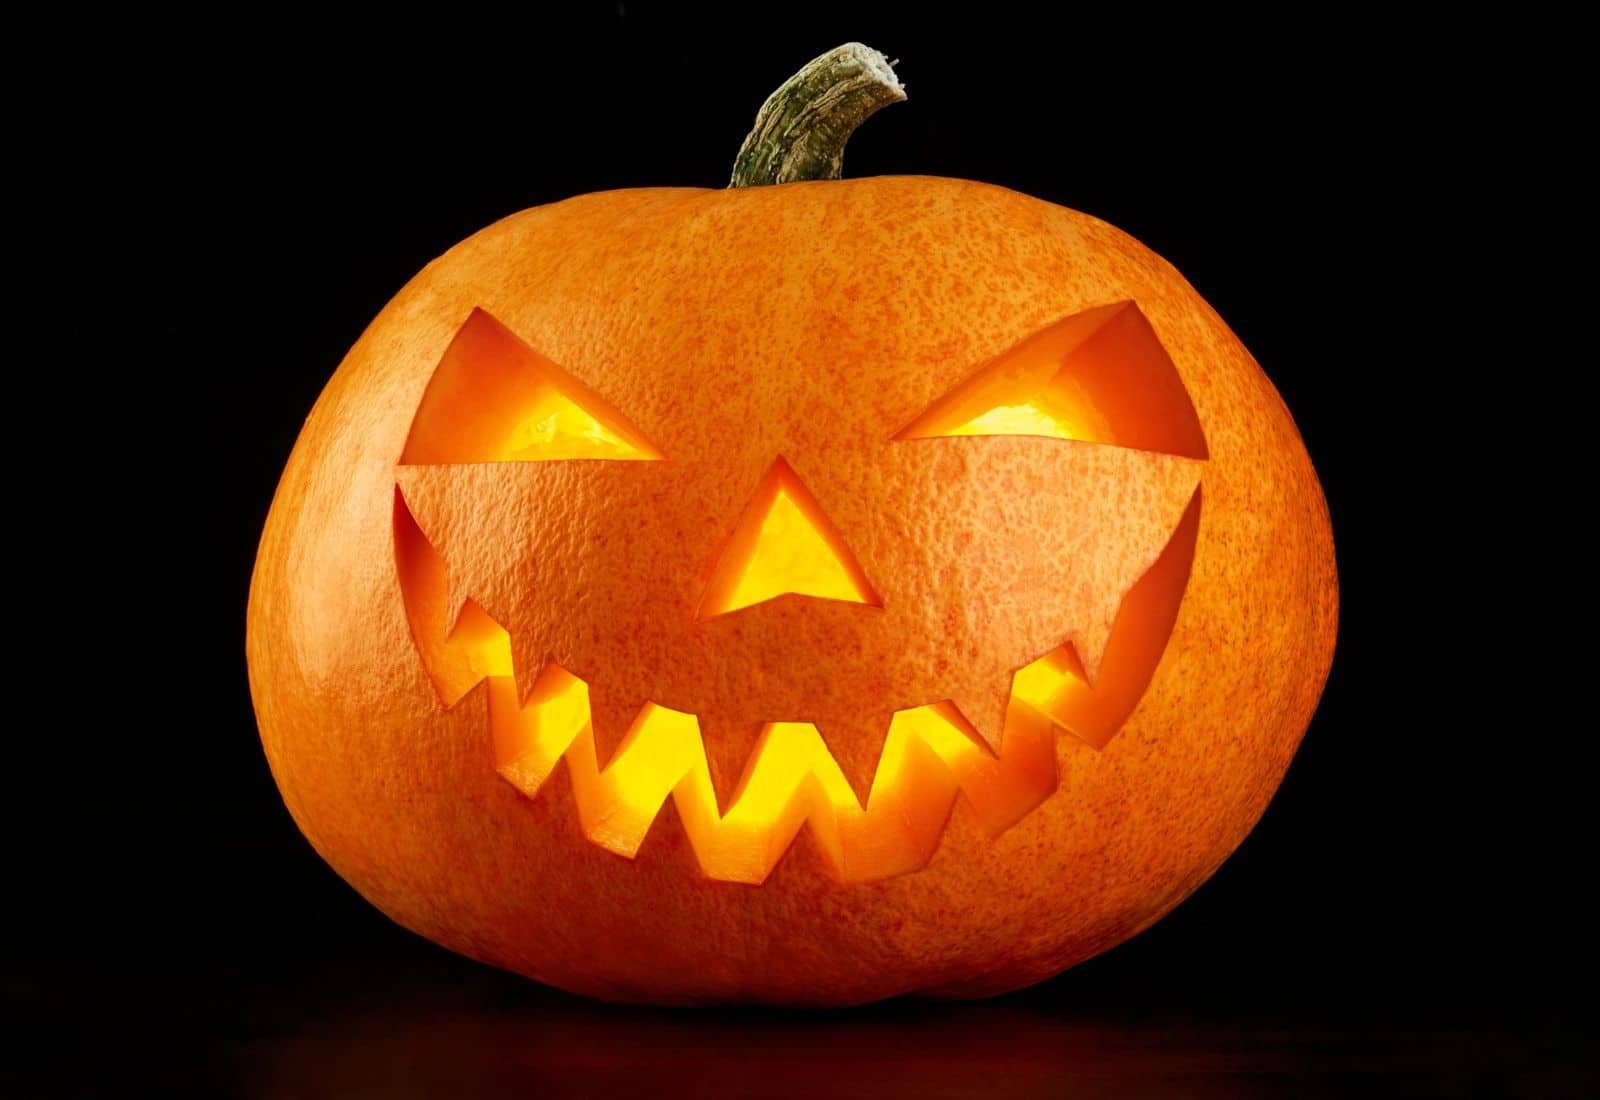 Scary jack-o-lantern face carving